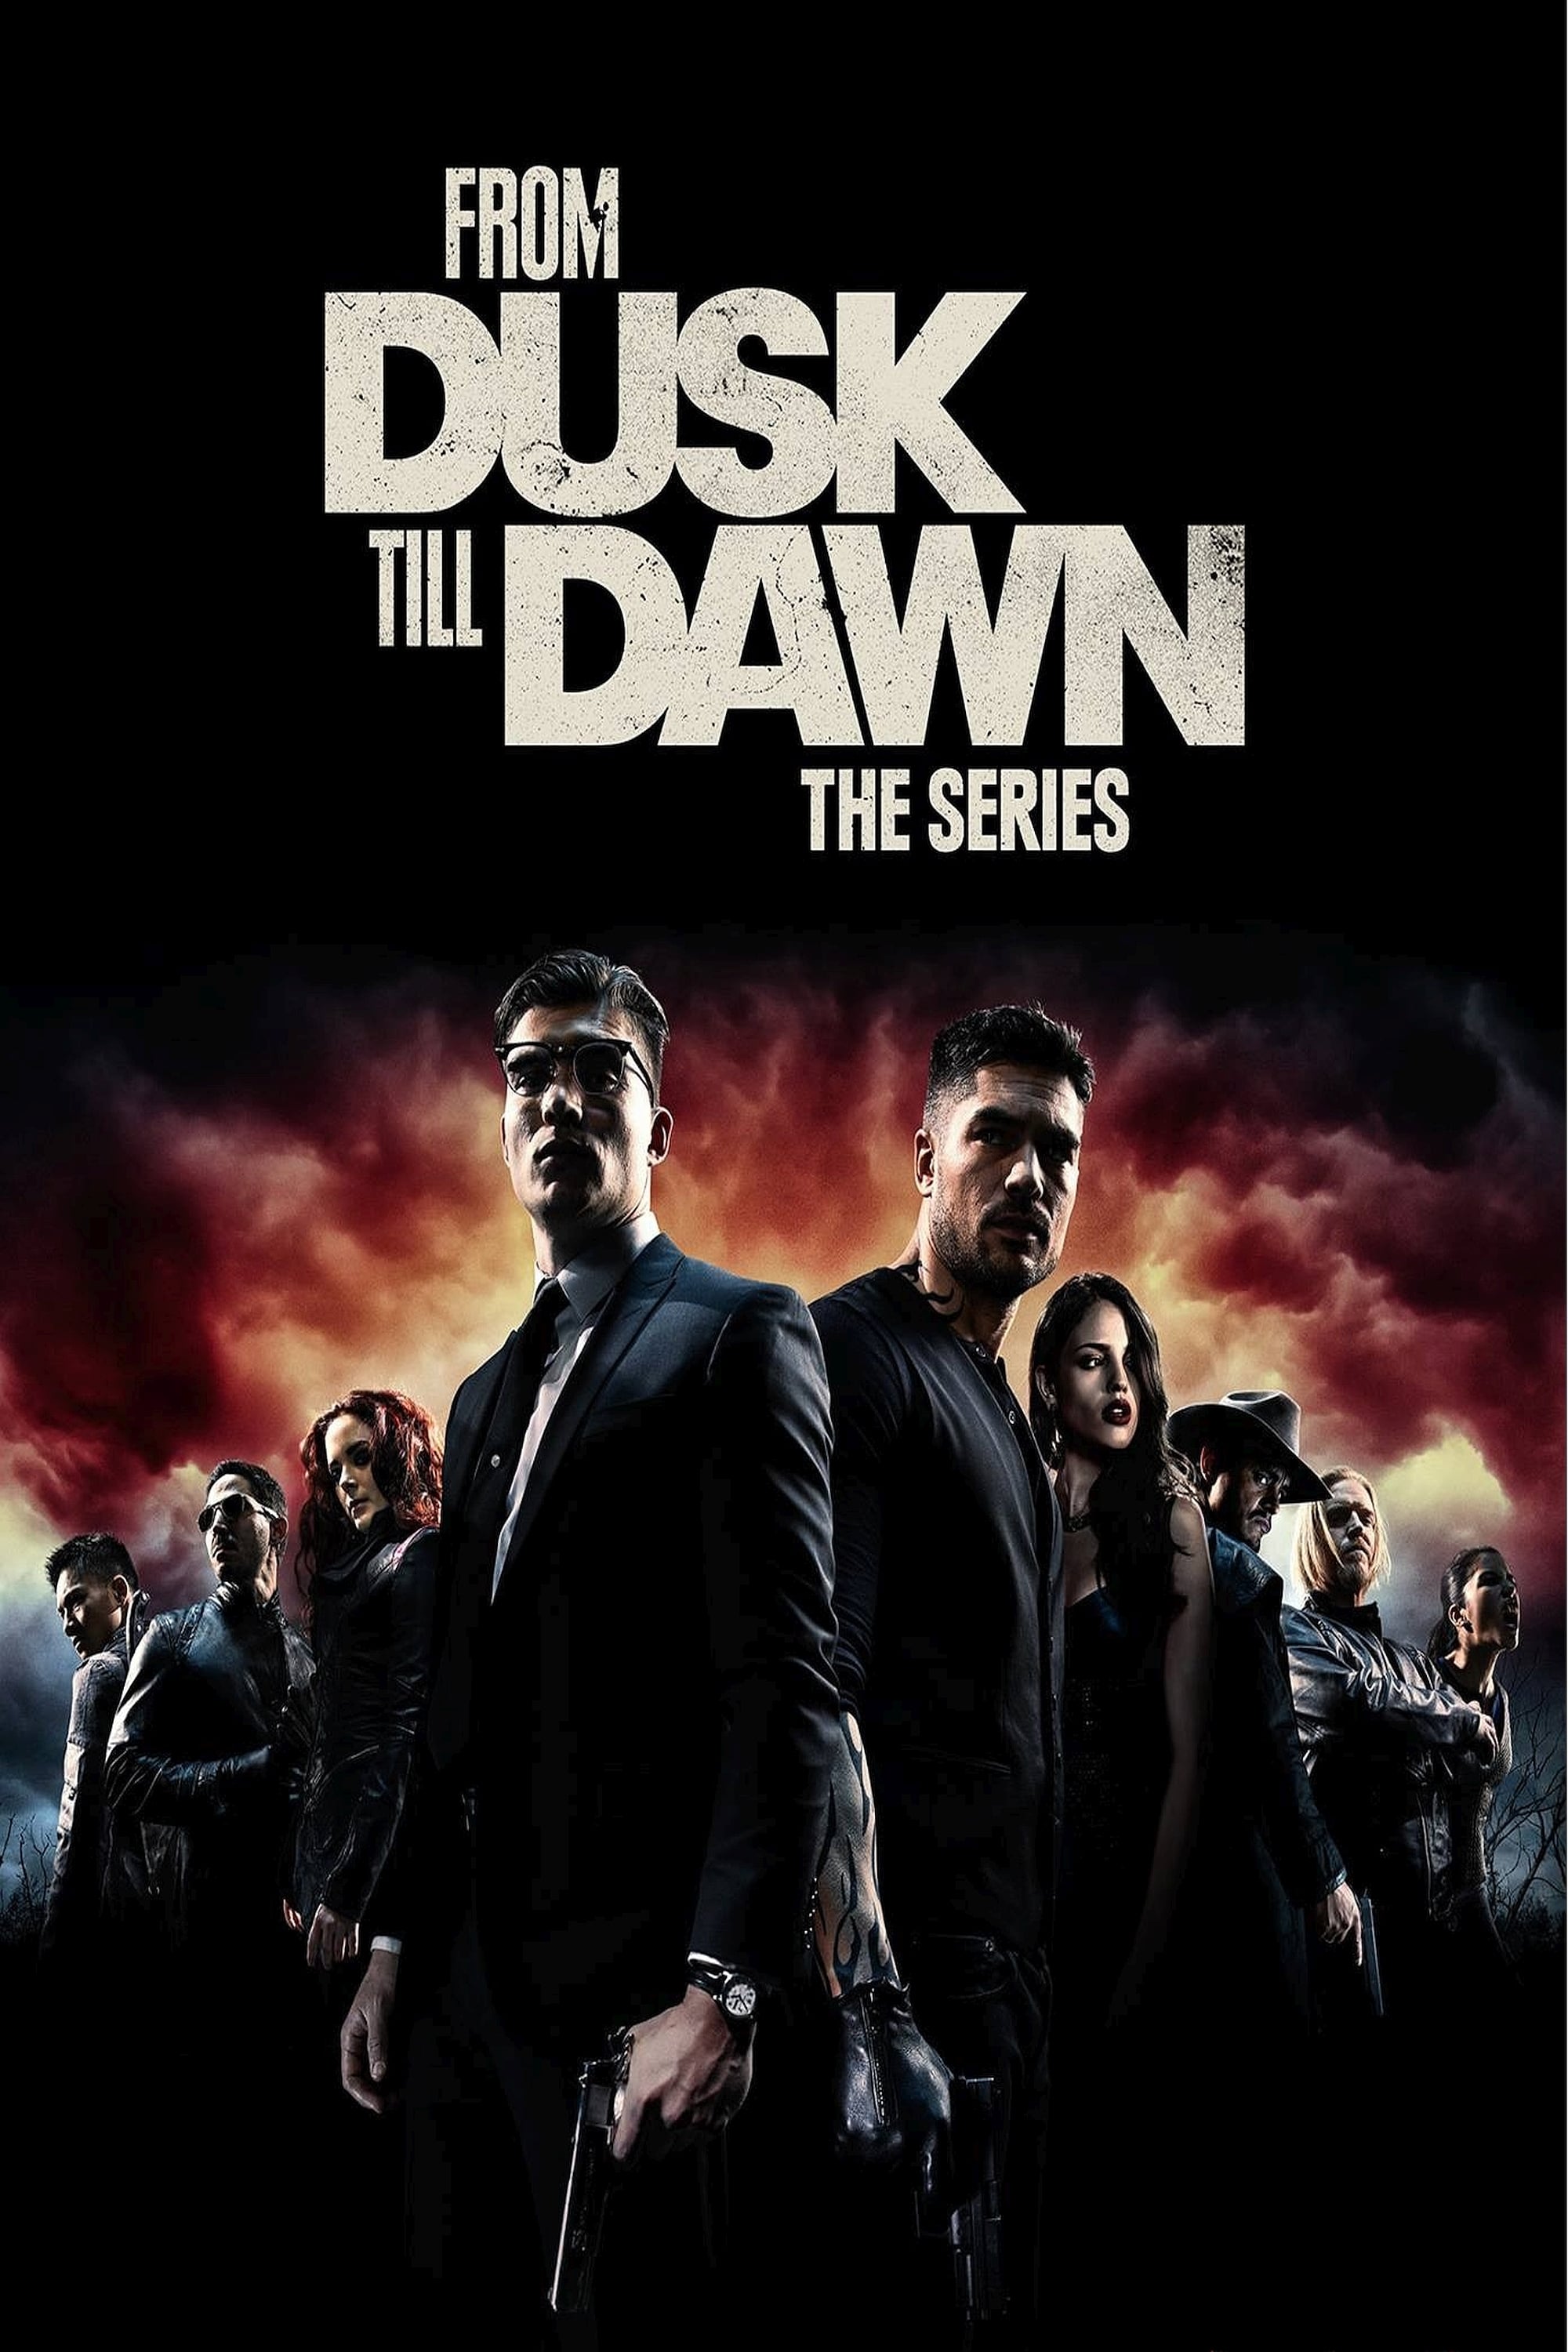 from dusk till dawn cast season 1